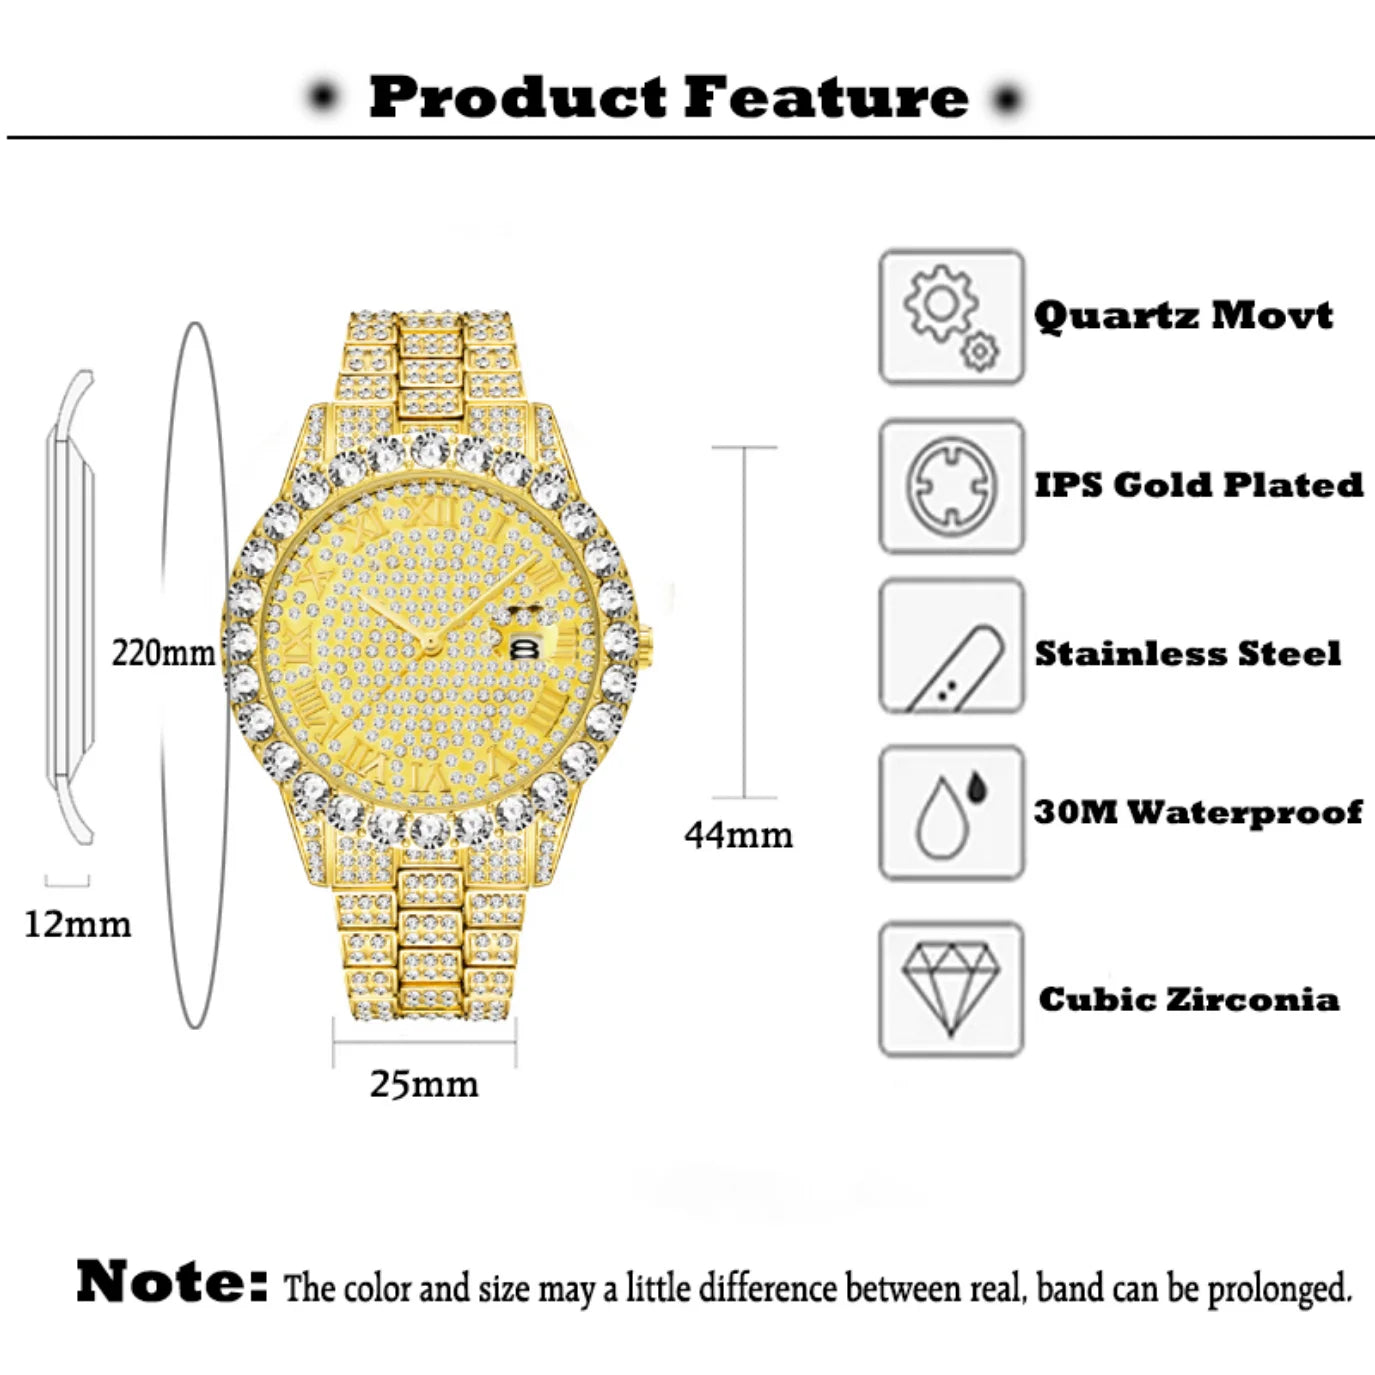 Moissanite Watch Bezel PVD Luxury Brand Golden Watch For Men Full Diamond Stylish Master Watch Gift Wholesale Jewelry AAA Clock LUXLIFE BRANDS